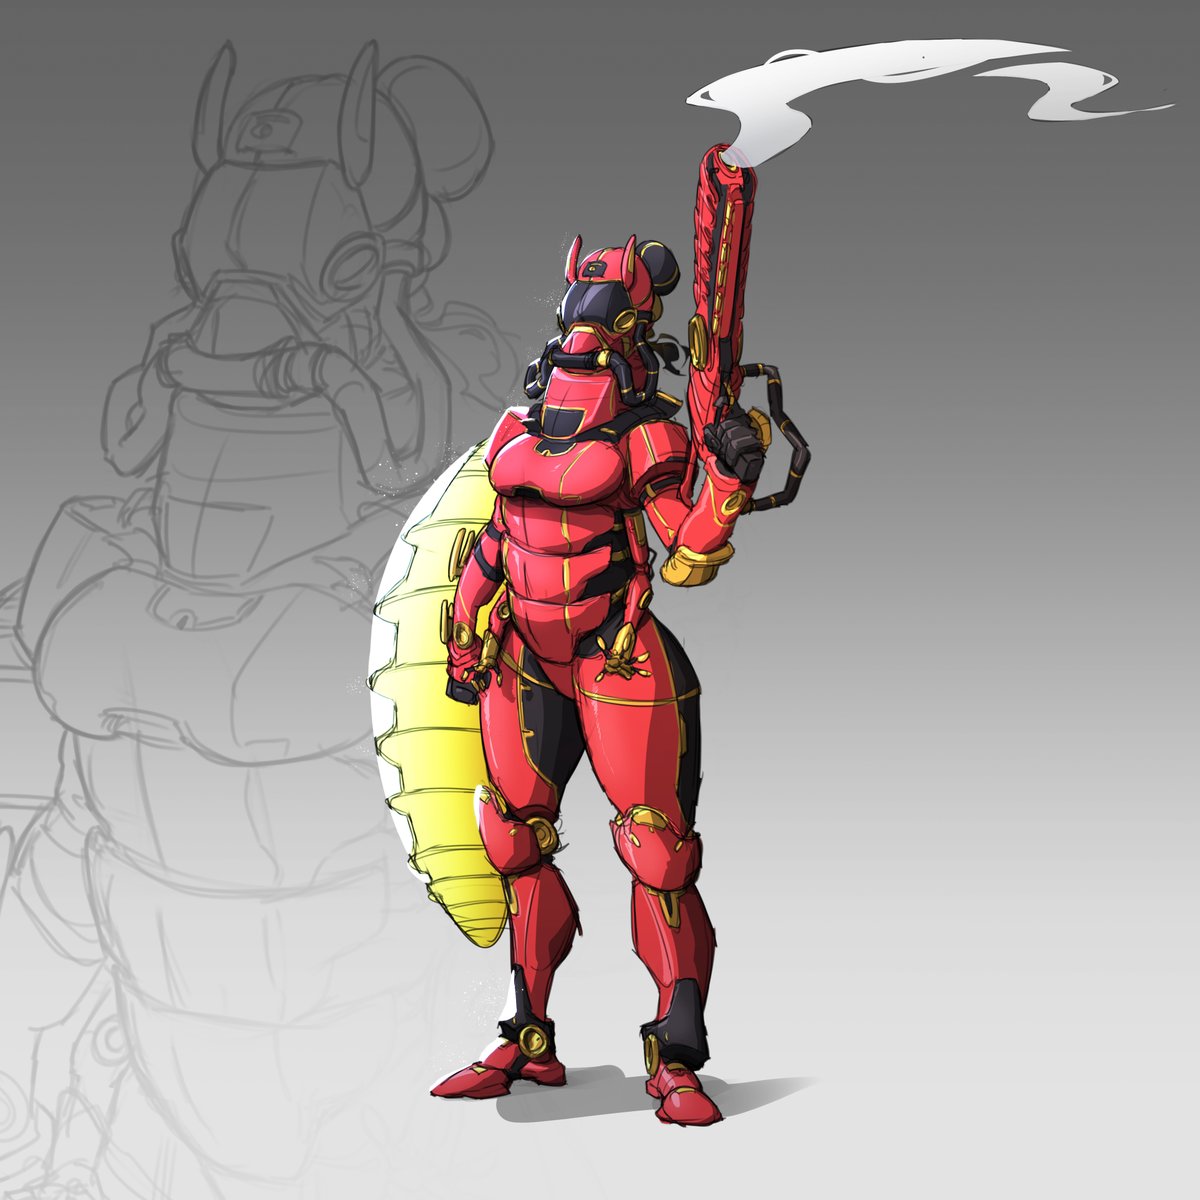 Pill bug 
Character design random sketch 

Artstation link:
artstation.com/artwork/m8W5ze
 
#characterdesign #characterconcept #conceptart #concept #bug #pillbug #cyperpunk #soldier #weapons